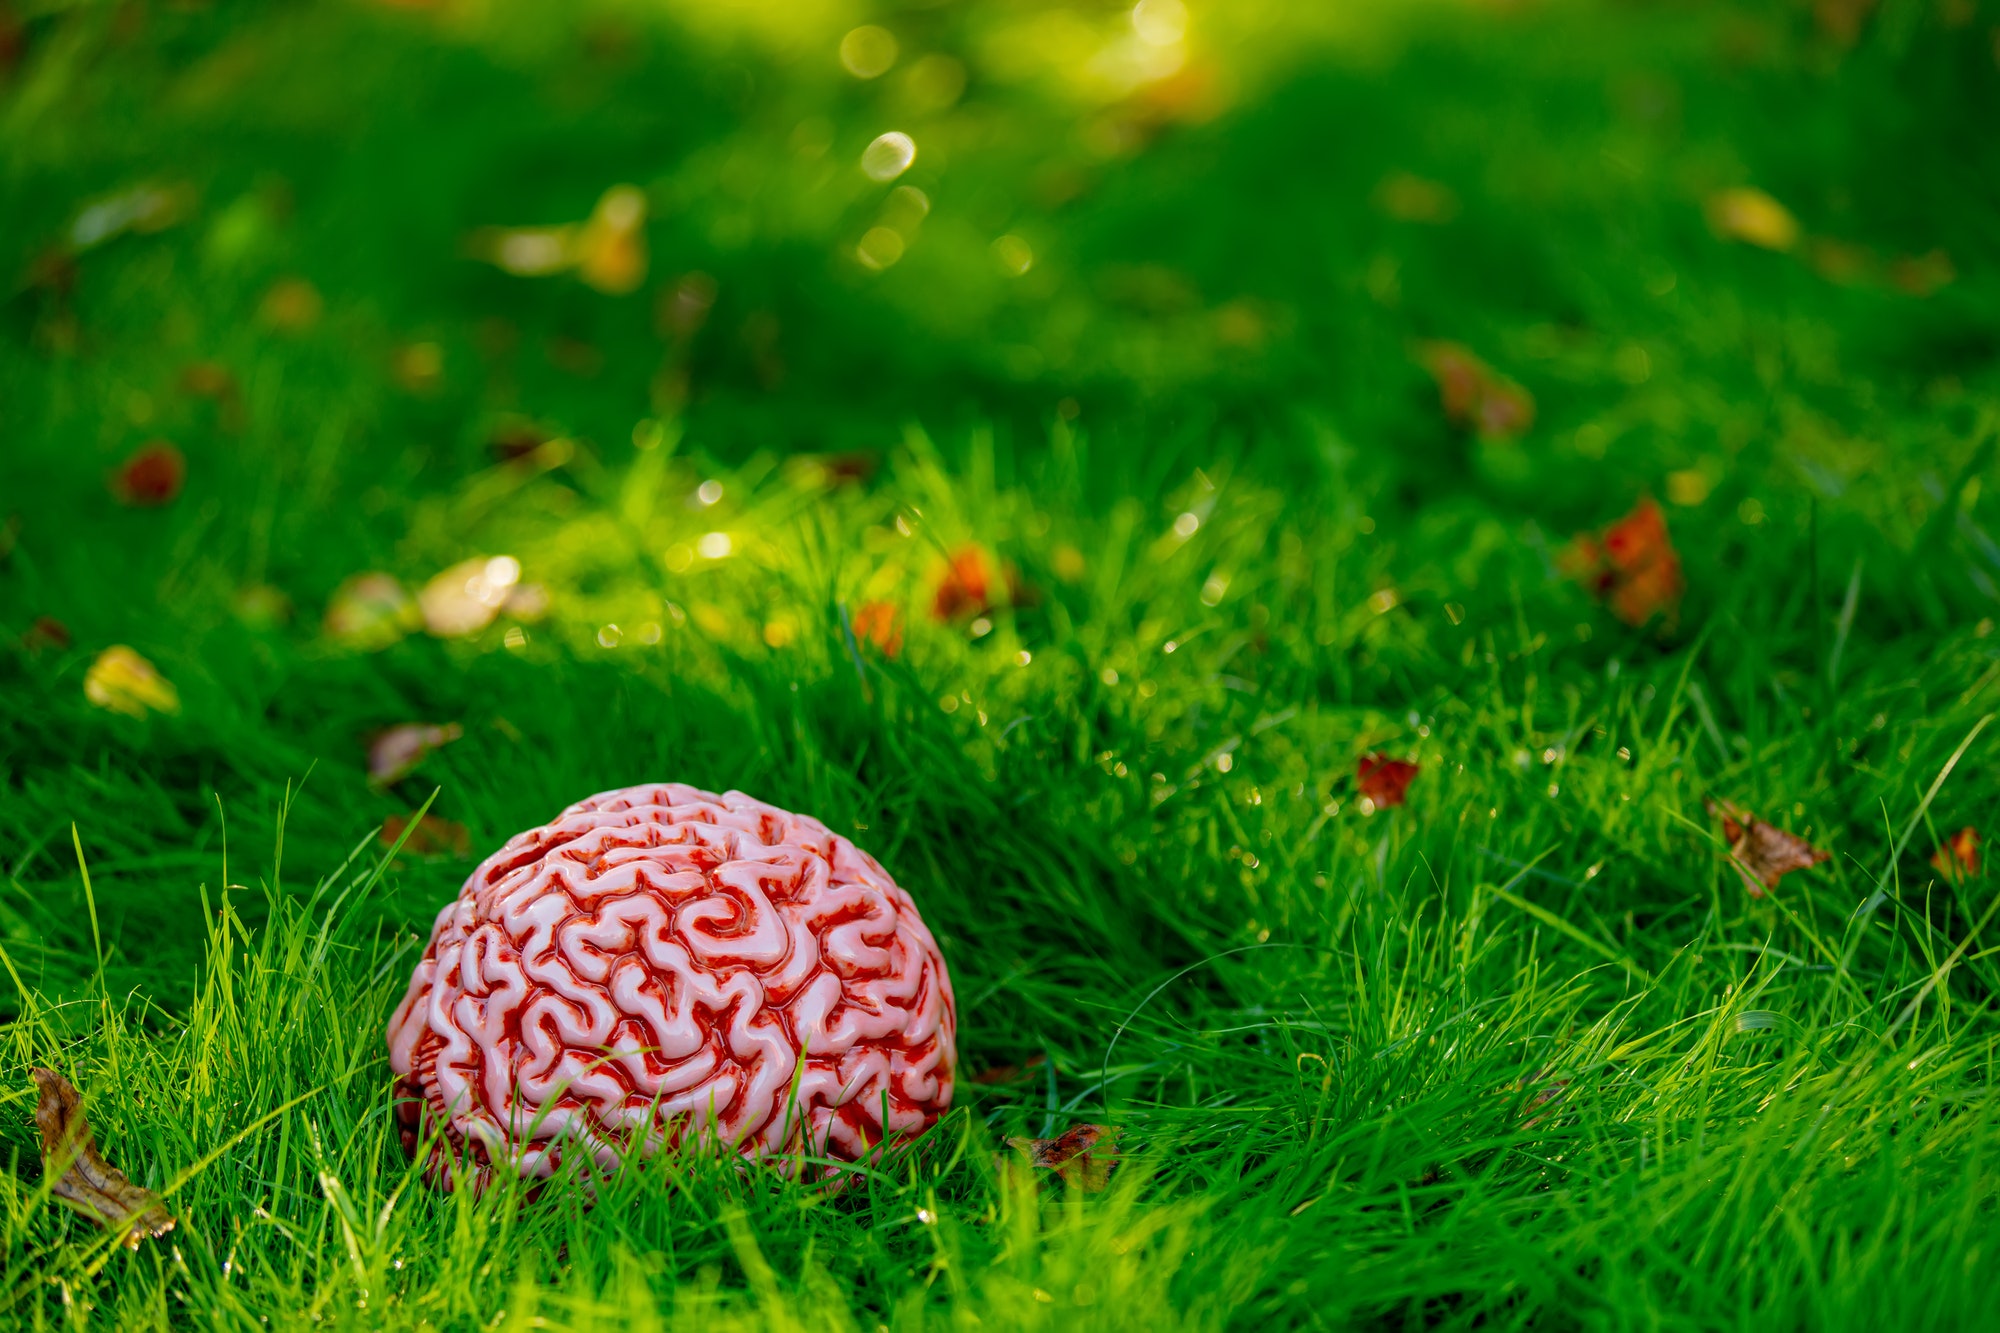 human brain on green grass in a garden